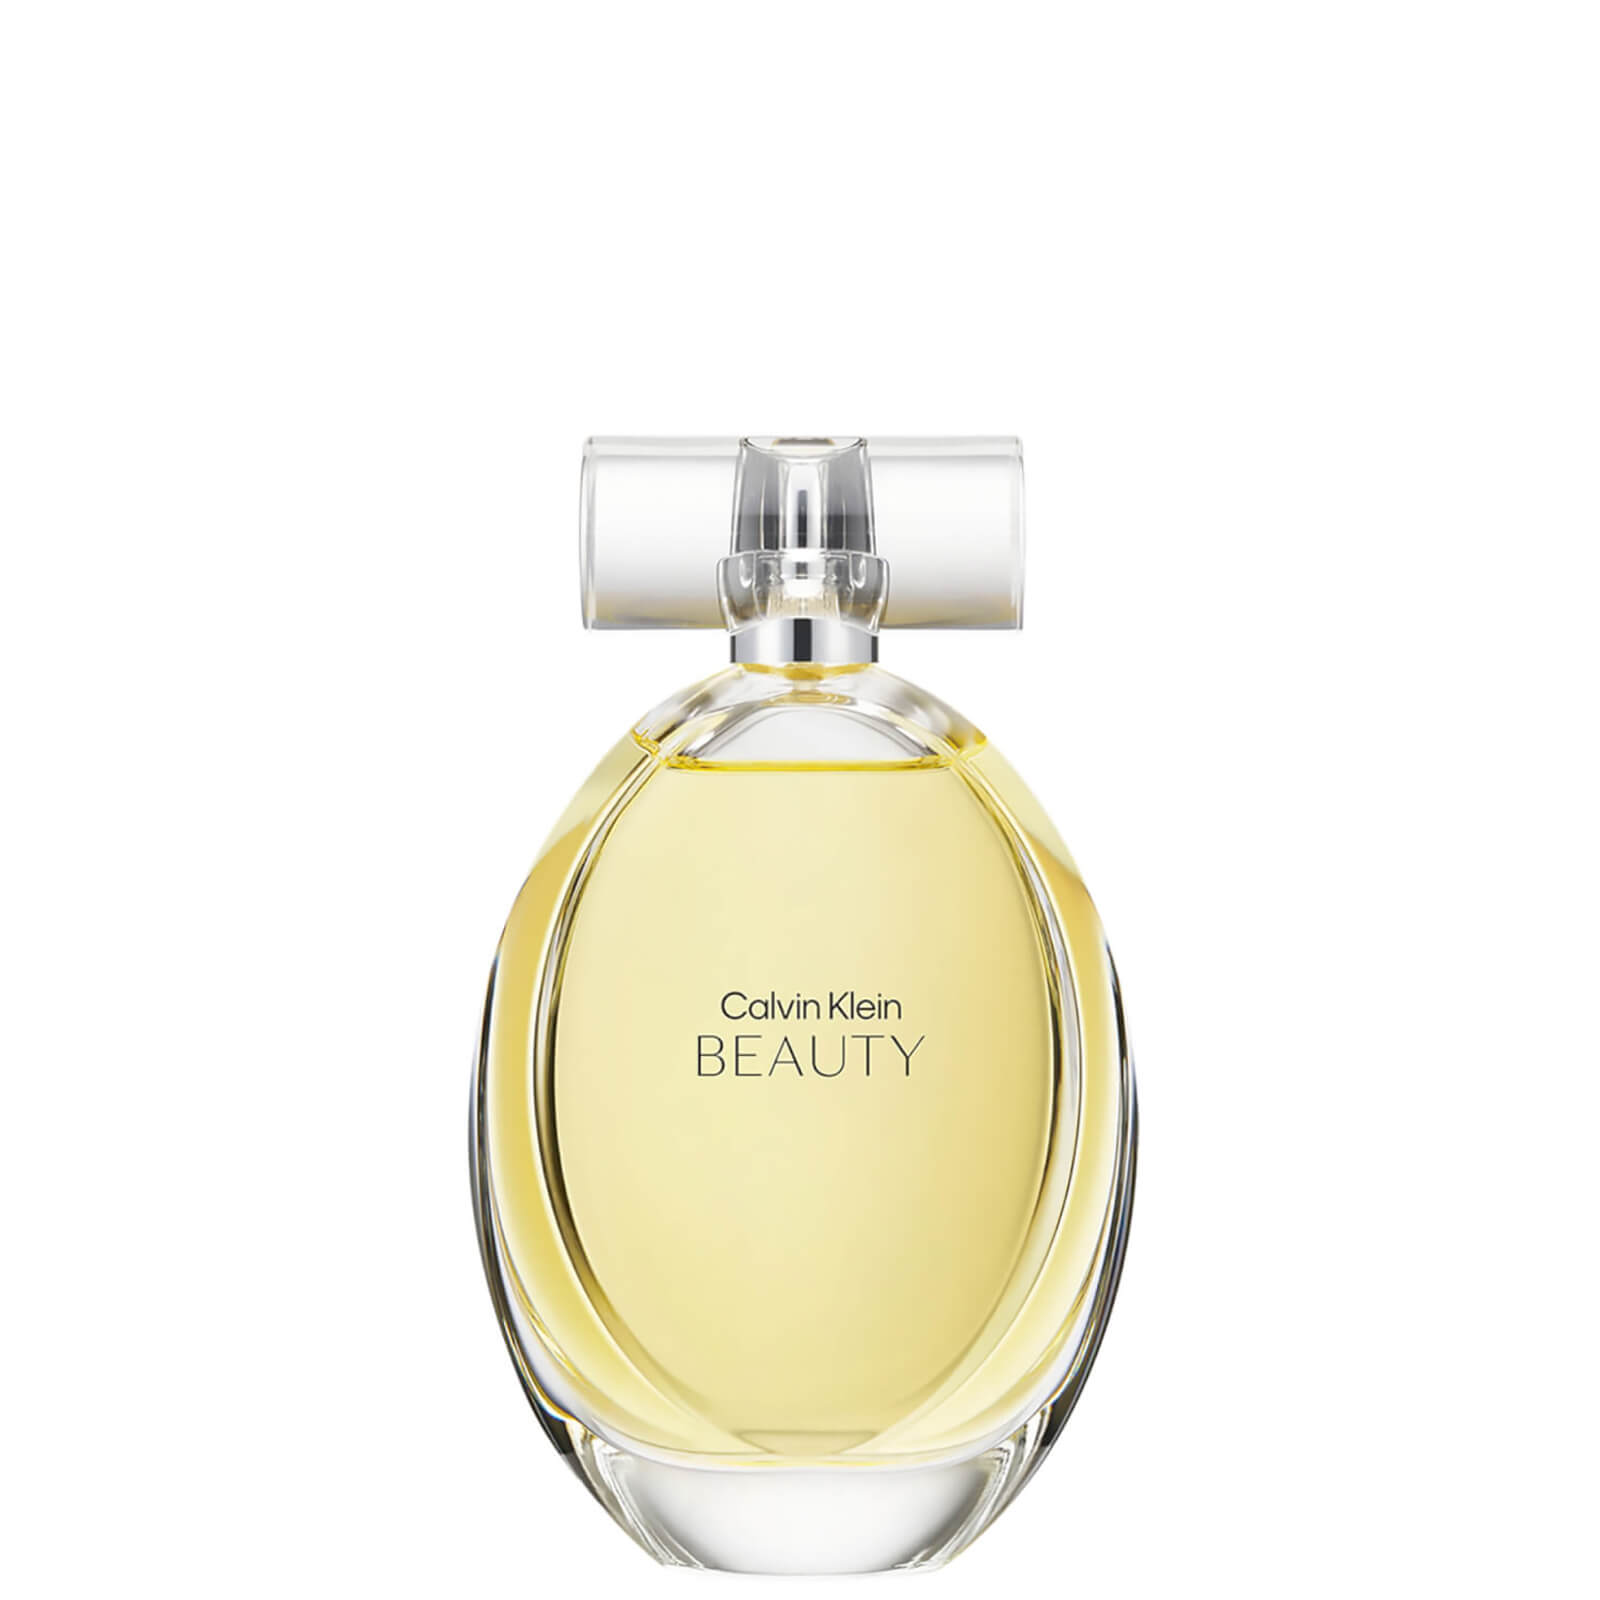 CALVIN KLEIN Beauty Eau de Parfum 50ml